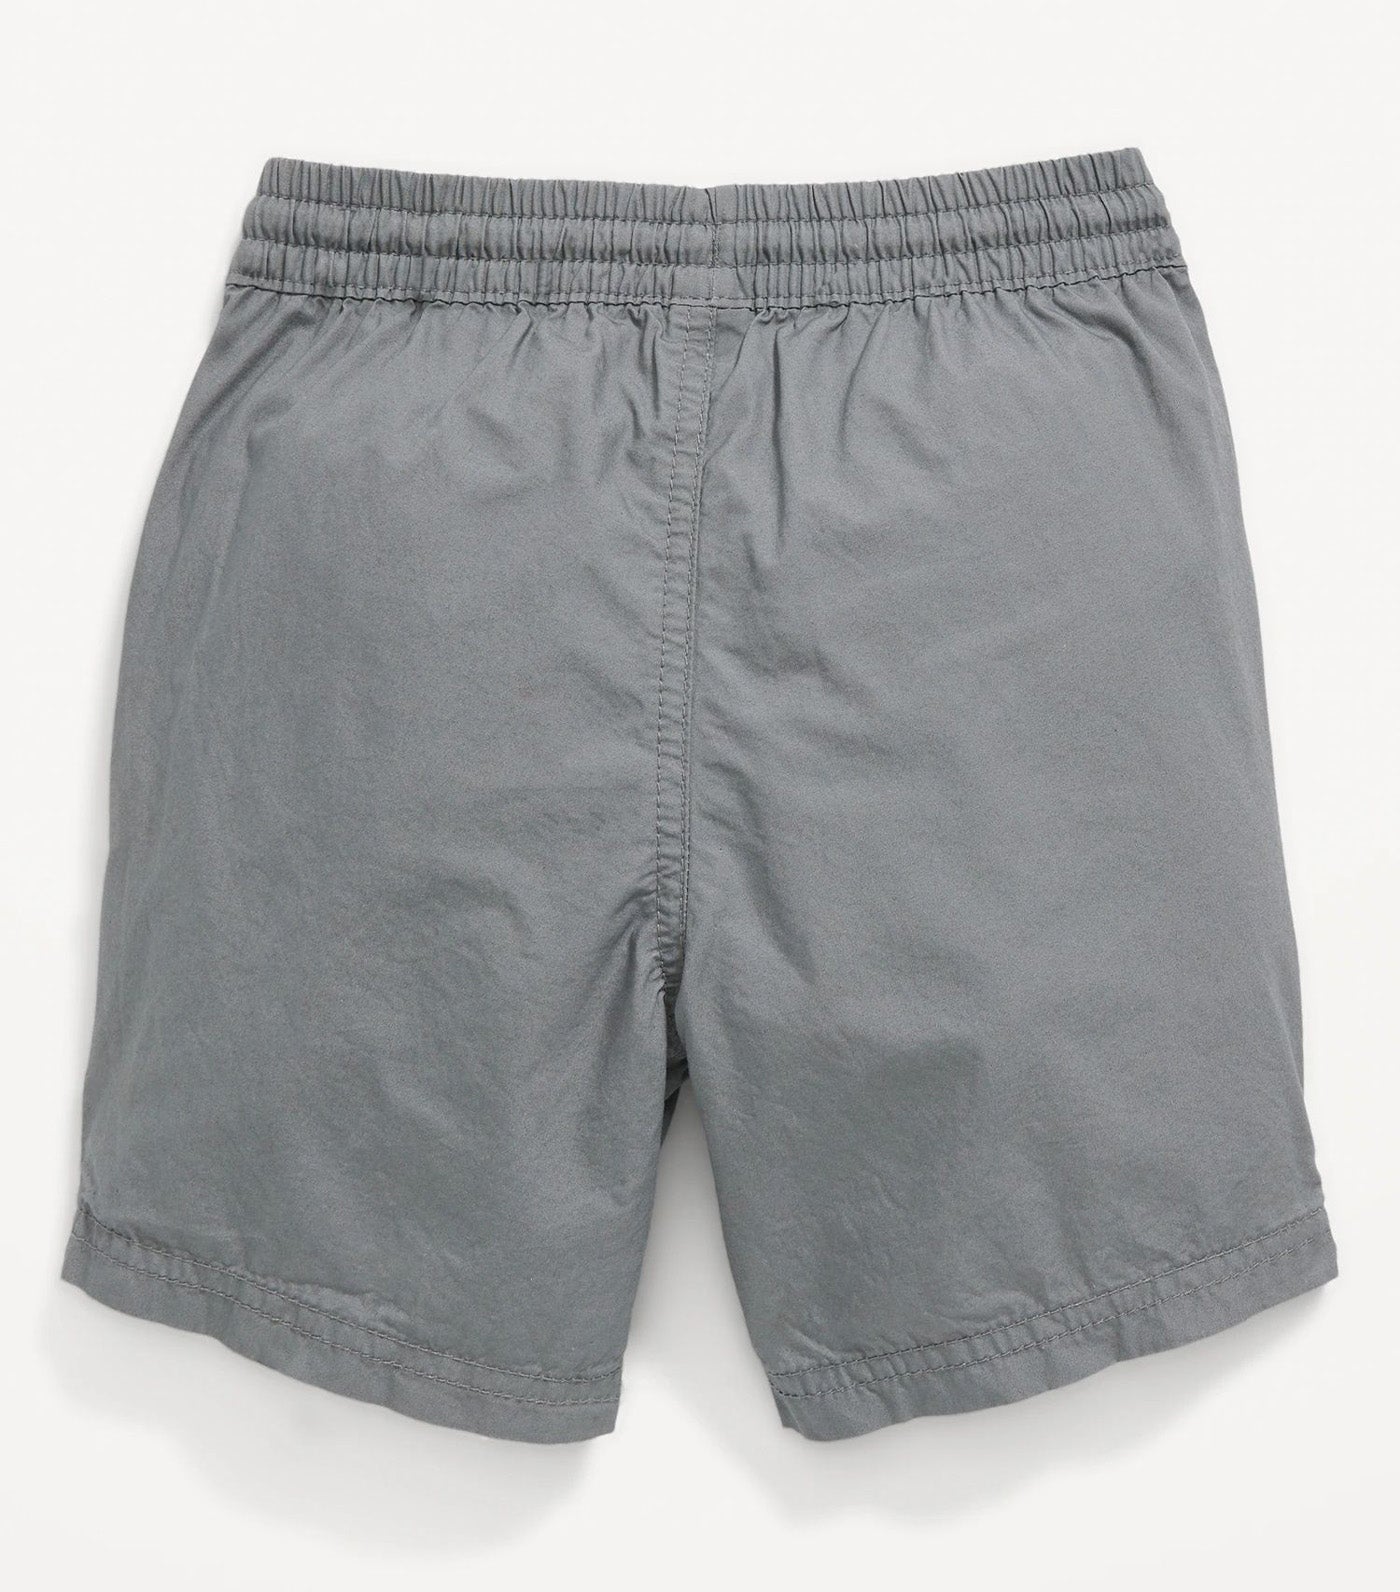 Unisex Cotton Poplin Pull-On Shorts for Toddler - Greystone